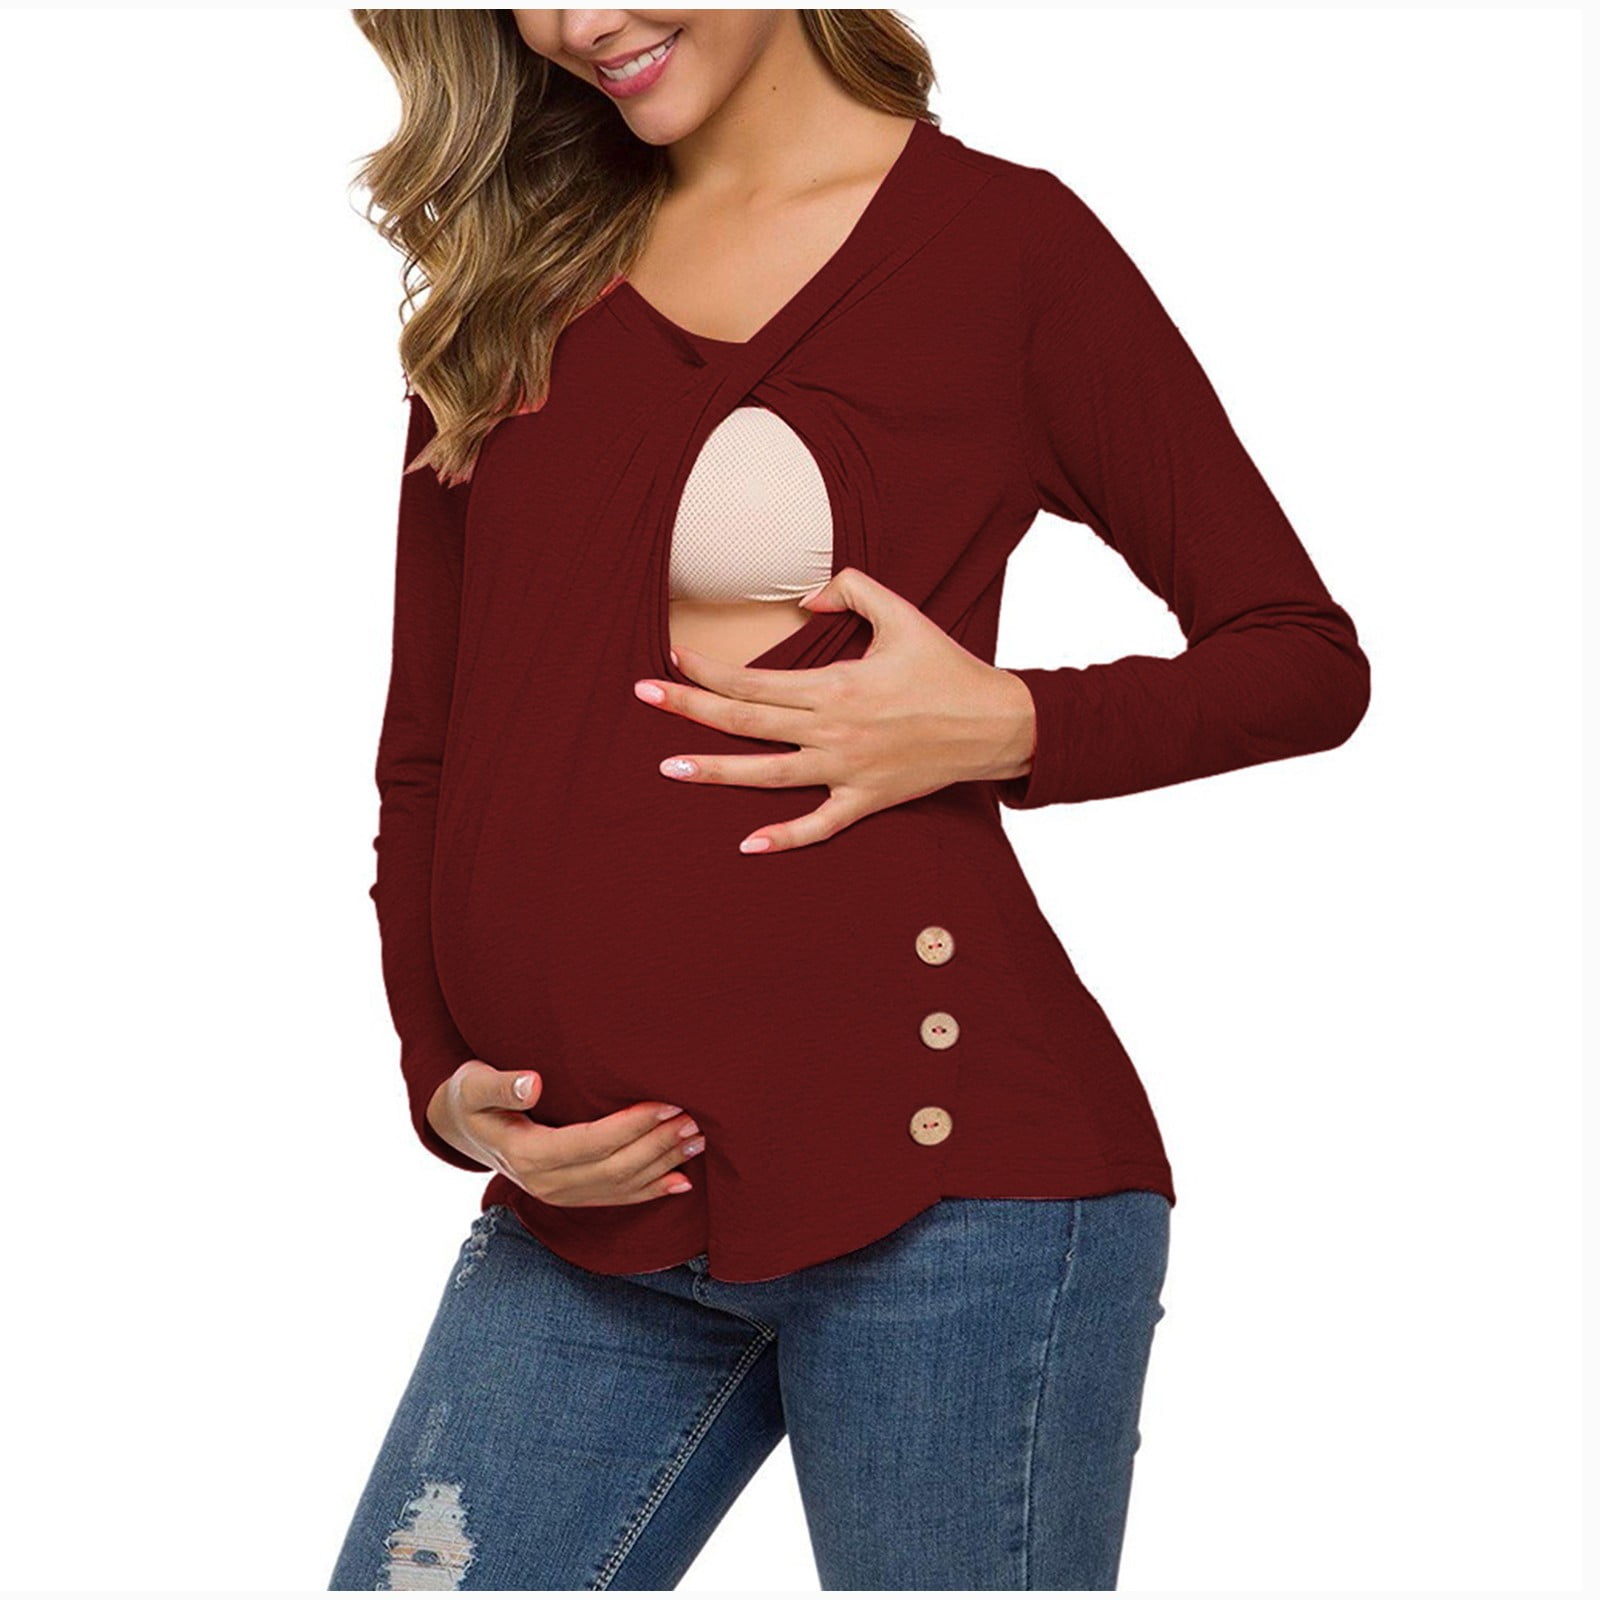 Molliya Maternity Shirts Wrap V Neck Front Pleat Peplum Nursing Tunic Blouse Top Pregnancy Clothes 